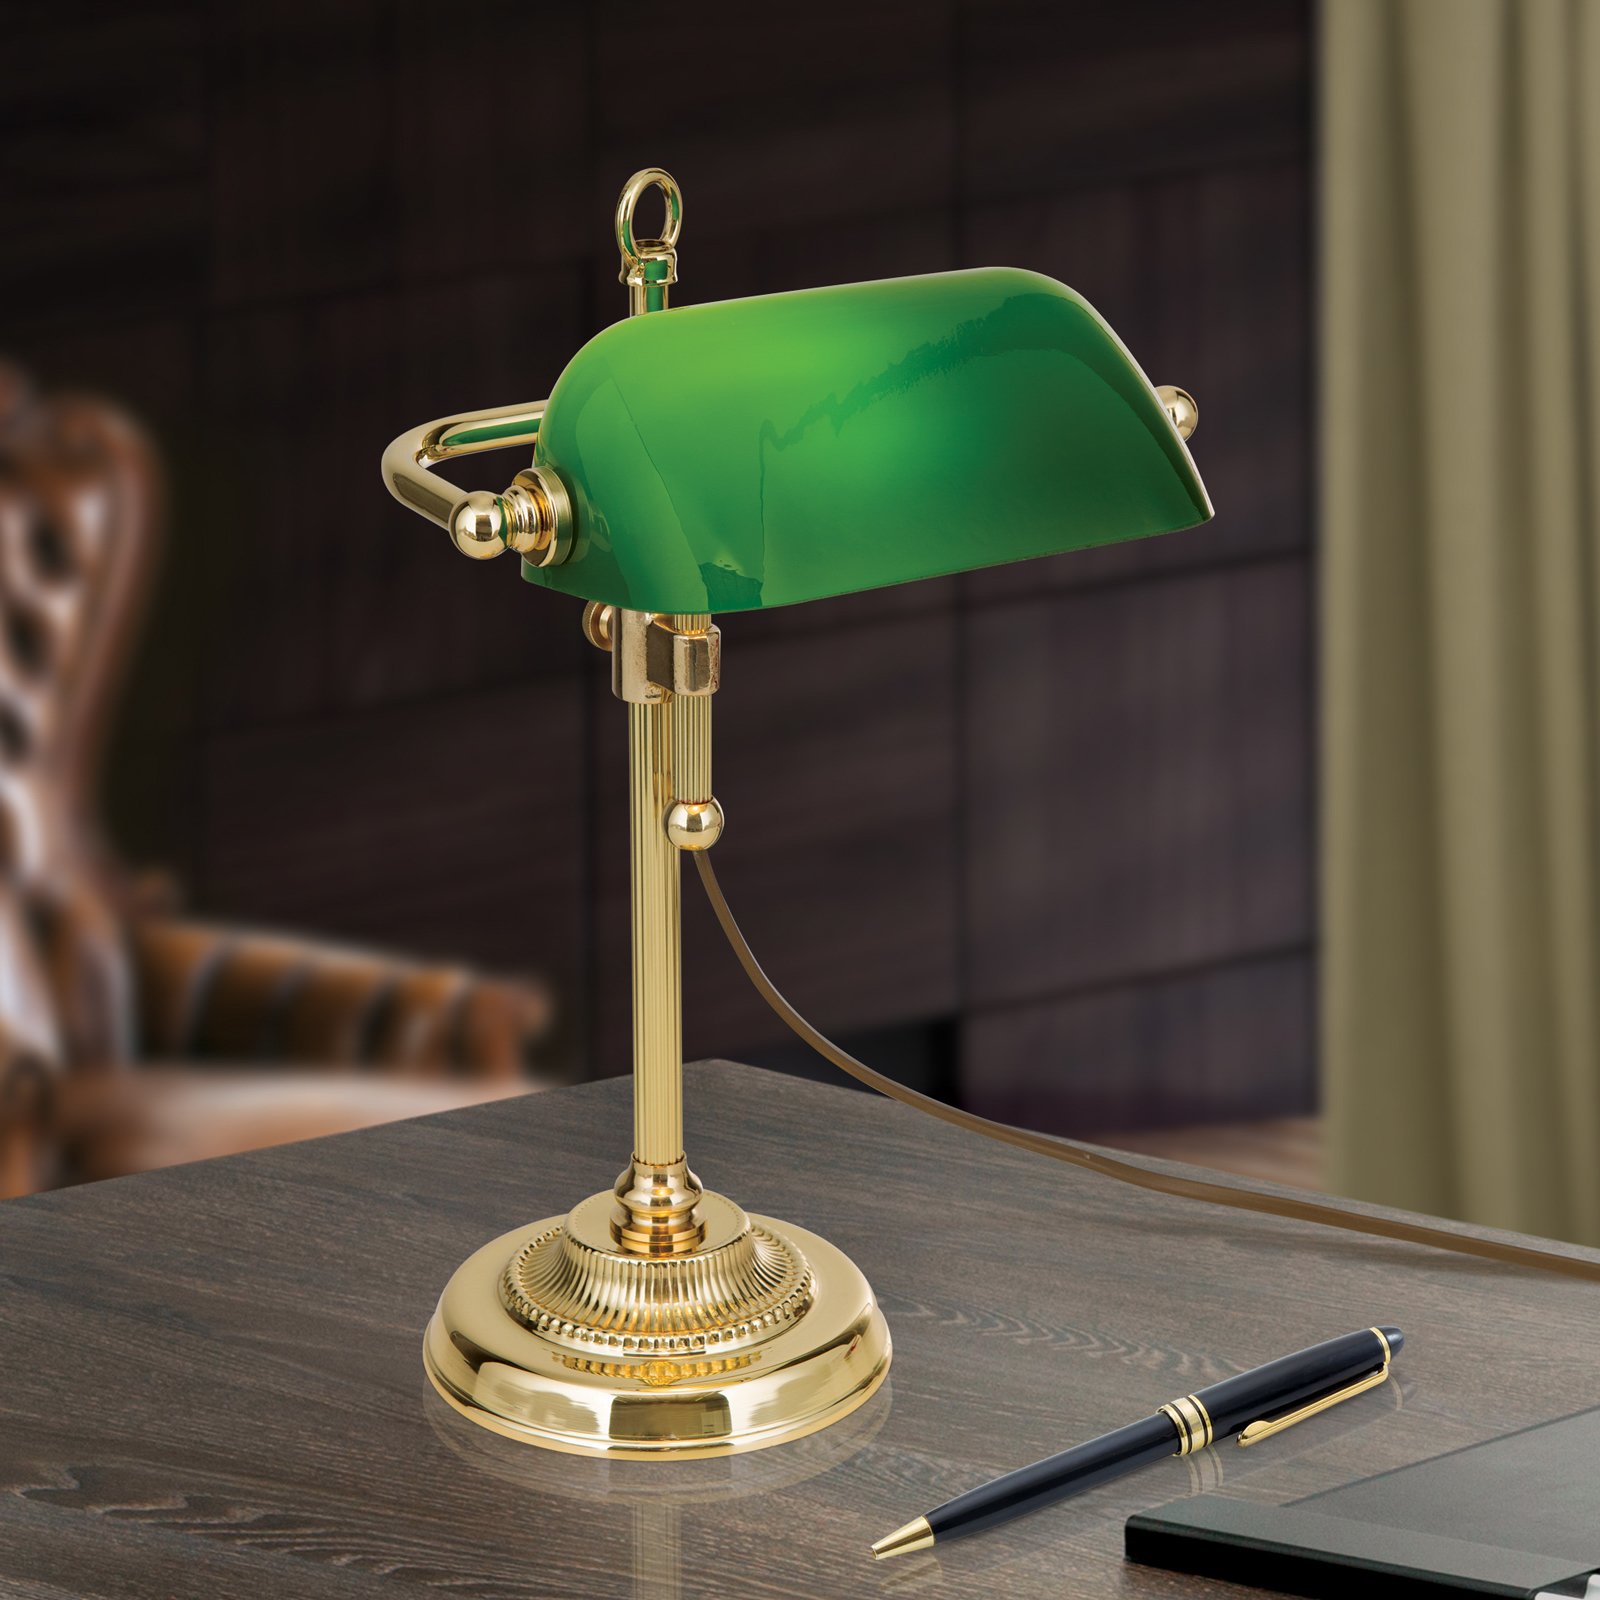 Lampa bankierska Harvard, mosiądz/zielony, 32 cm